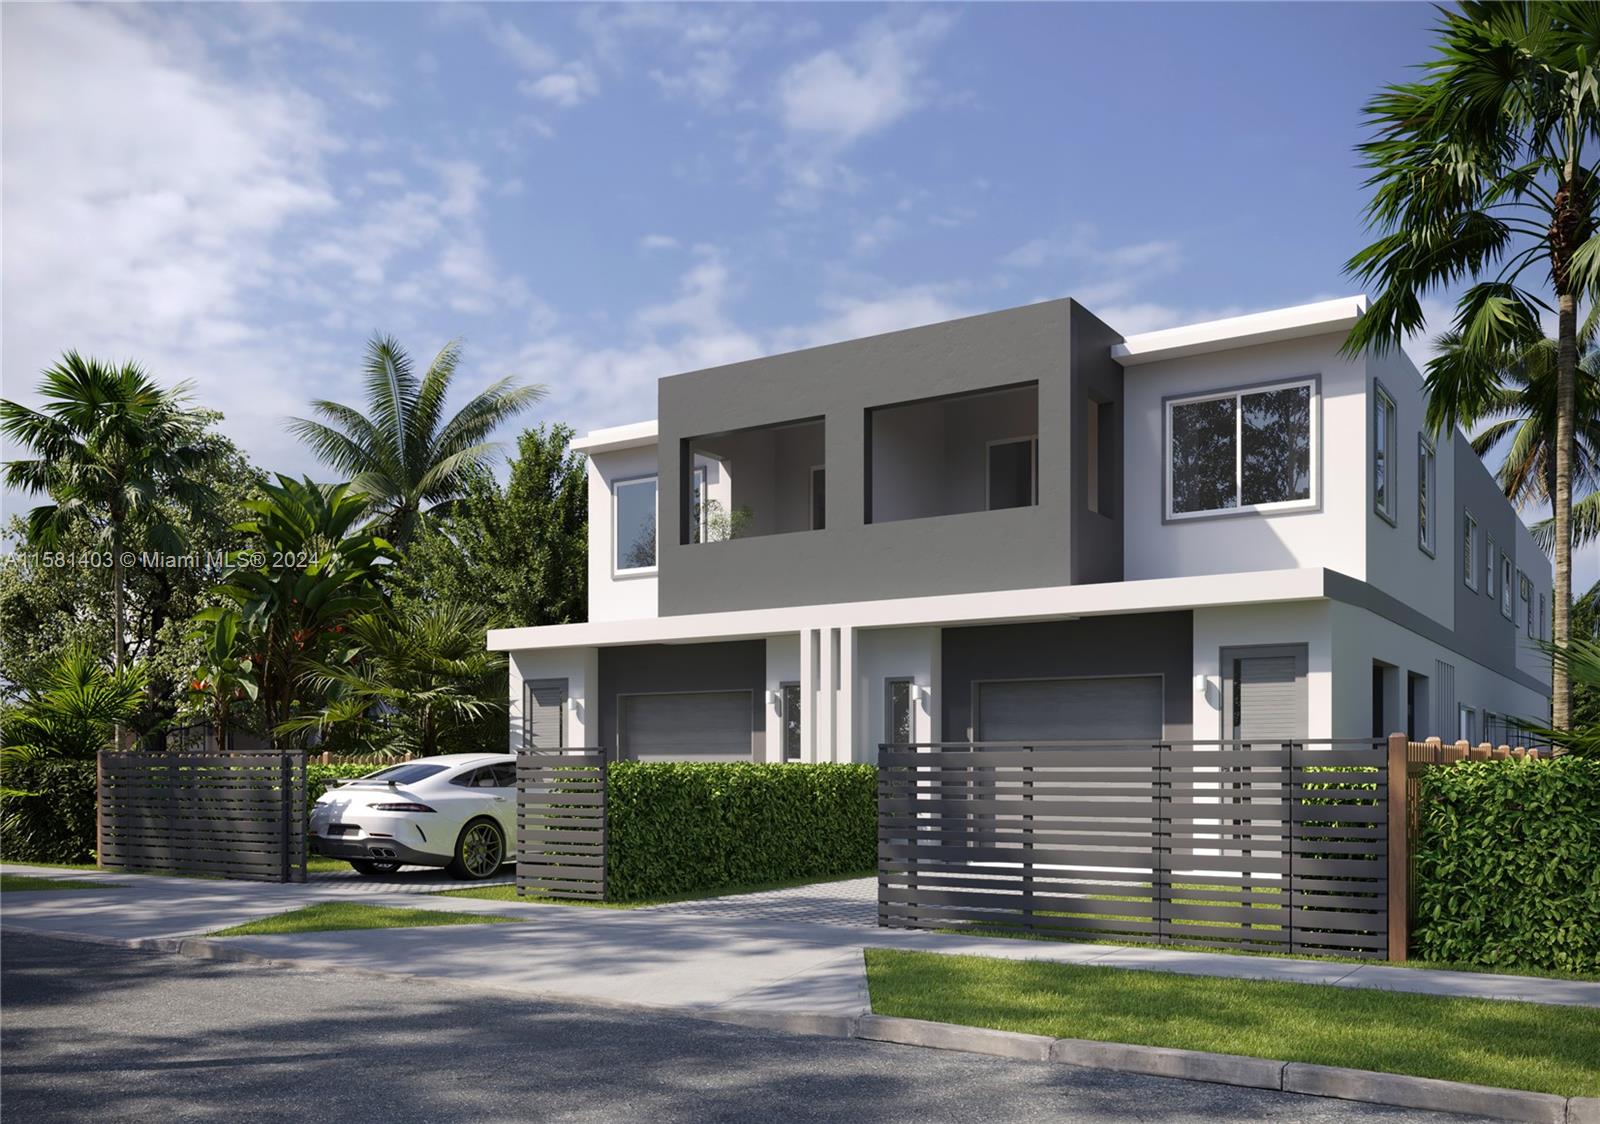 Rental Property at 3187 Sw 23rd St, Miami, Broward County, Florida -  - $3,100,000 MO.